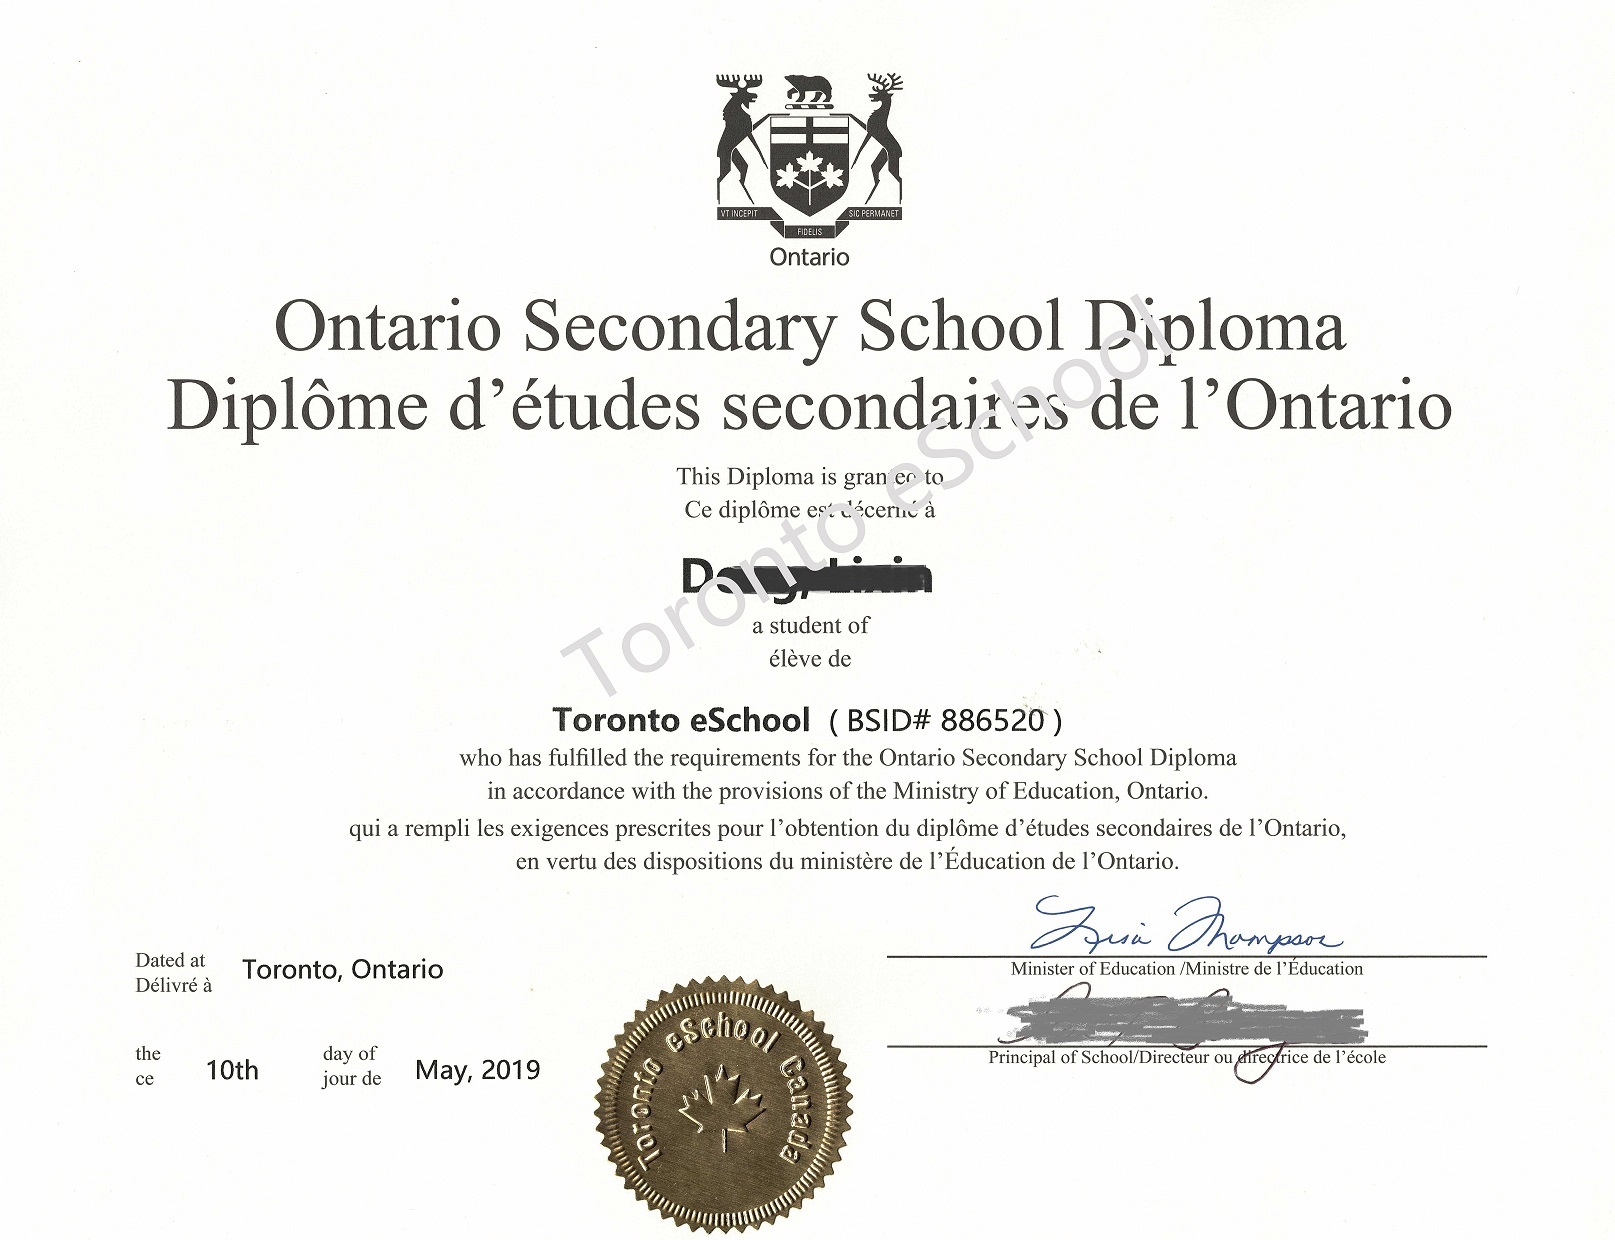 OSSD_TorontoeSchool